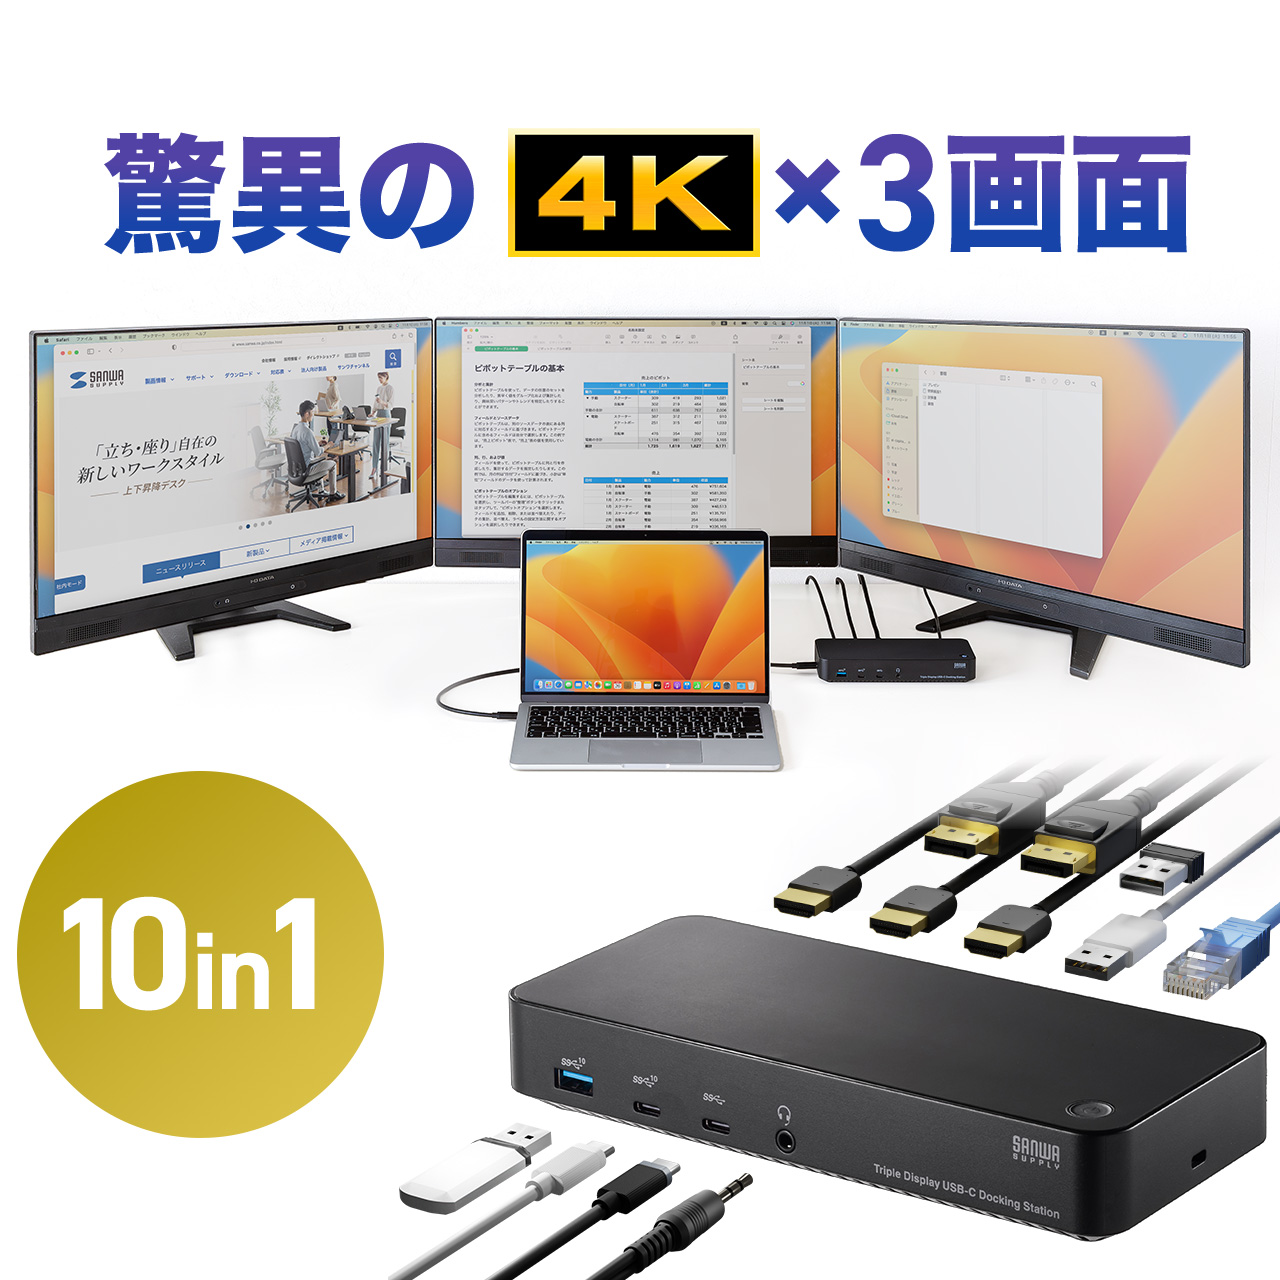 Amazon.co.jp: 純正 Lenovo ThinkPad 65W ACアダプター 20V 3.25A ADLX65NCT2A ニューバージョン  : パソコン・周辺機器